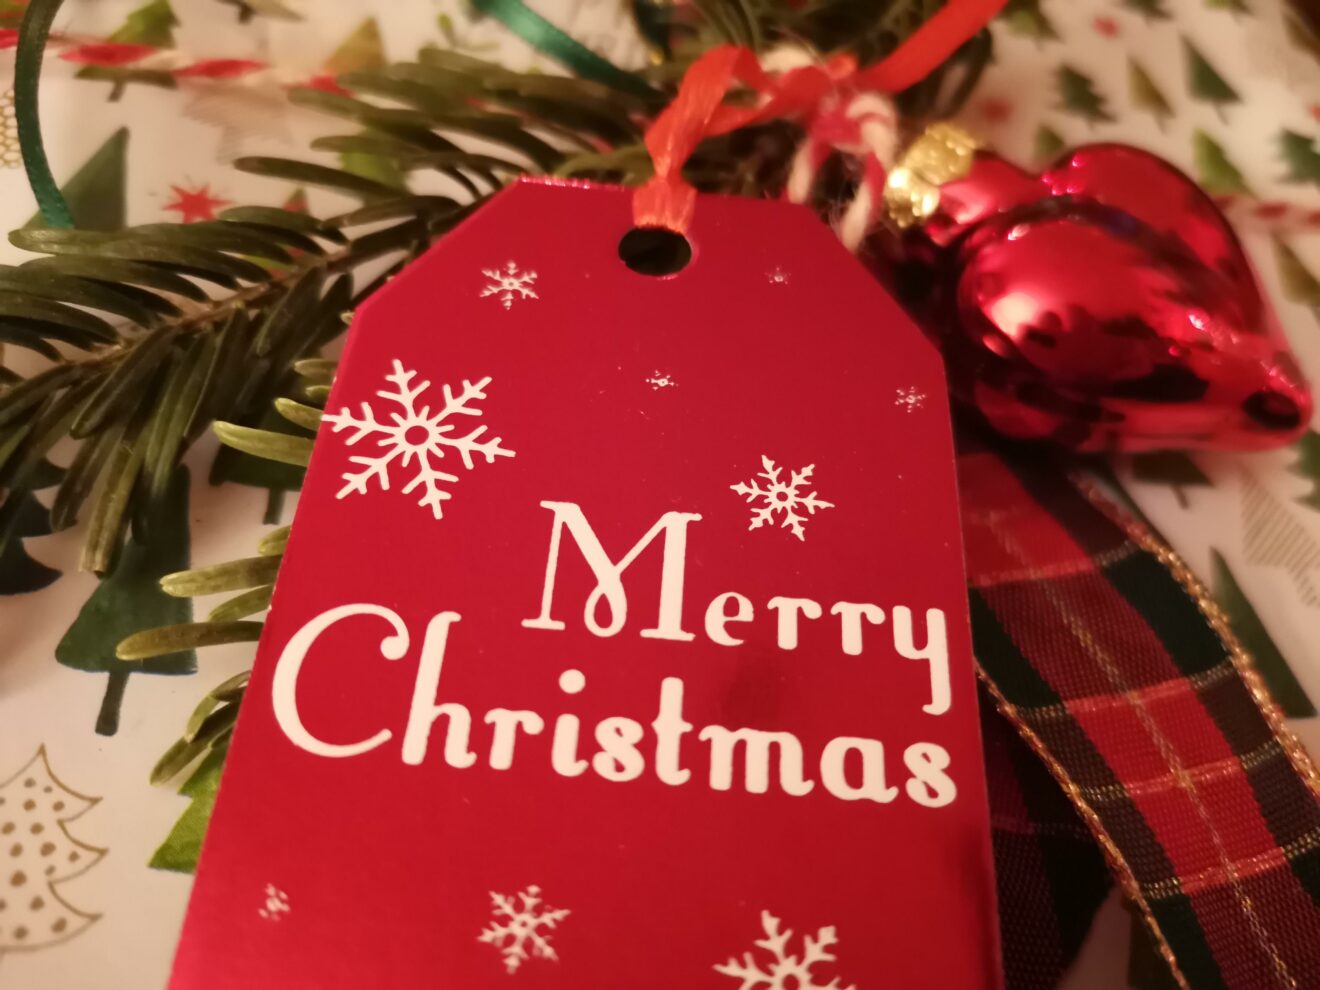 Merry_Christmas